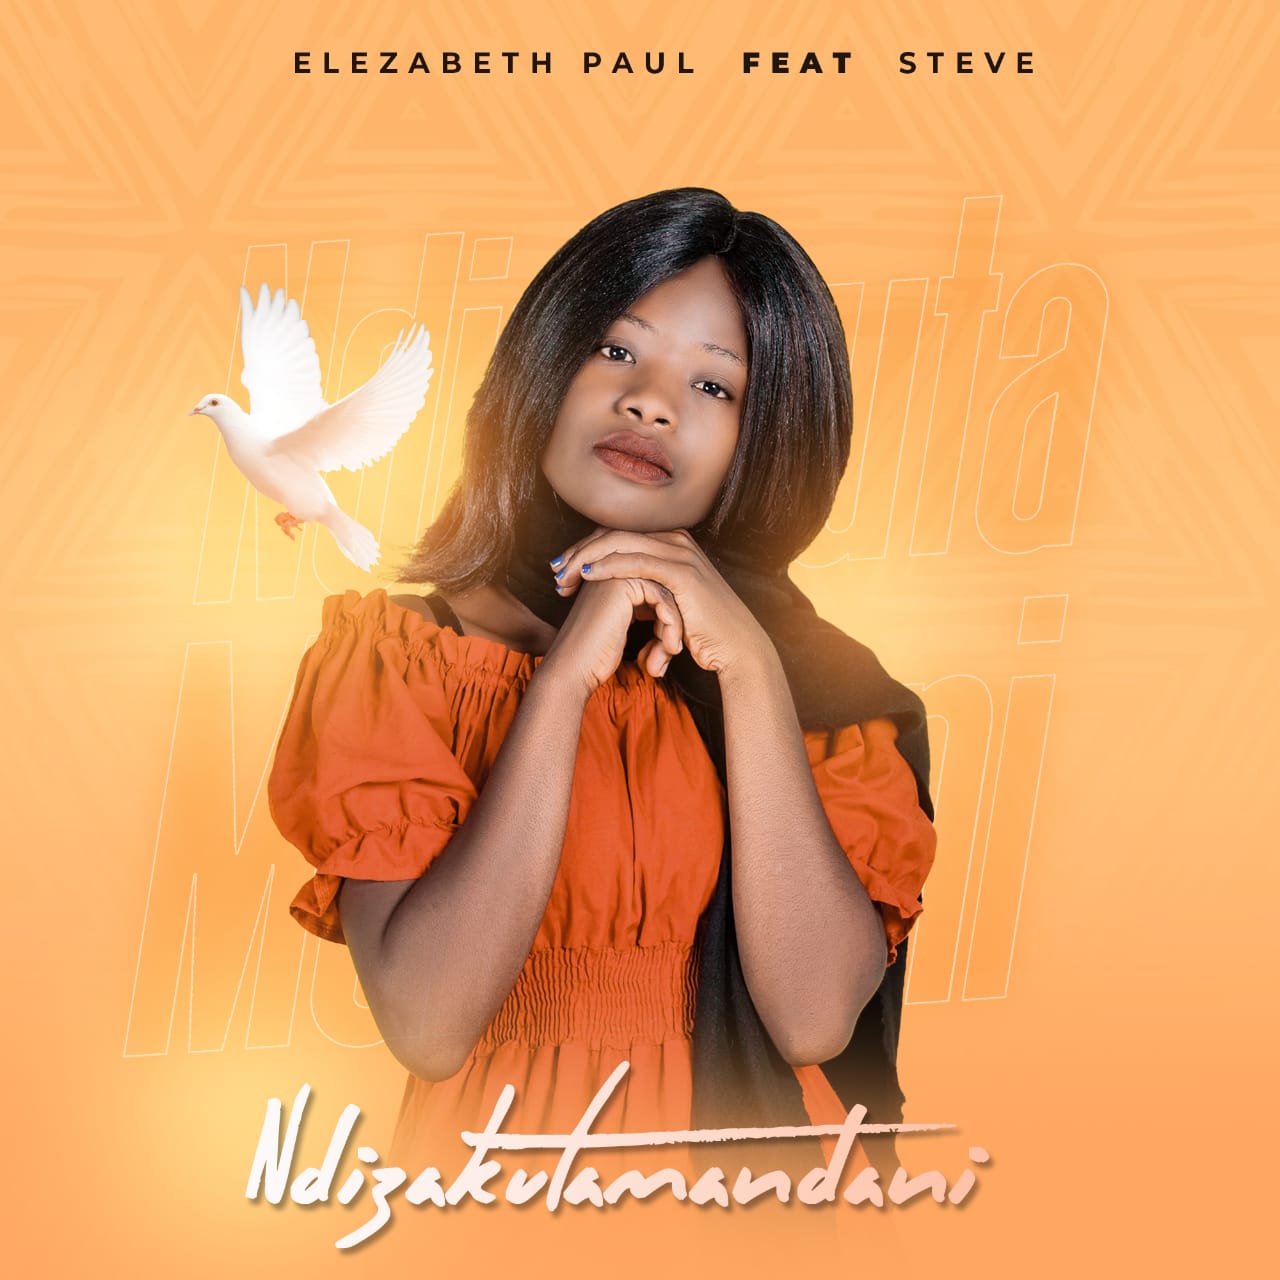  Elizabeth-Paul-Ndizakutamandani-Ft-Steve-Prod-by-CF-Records.